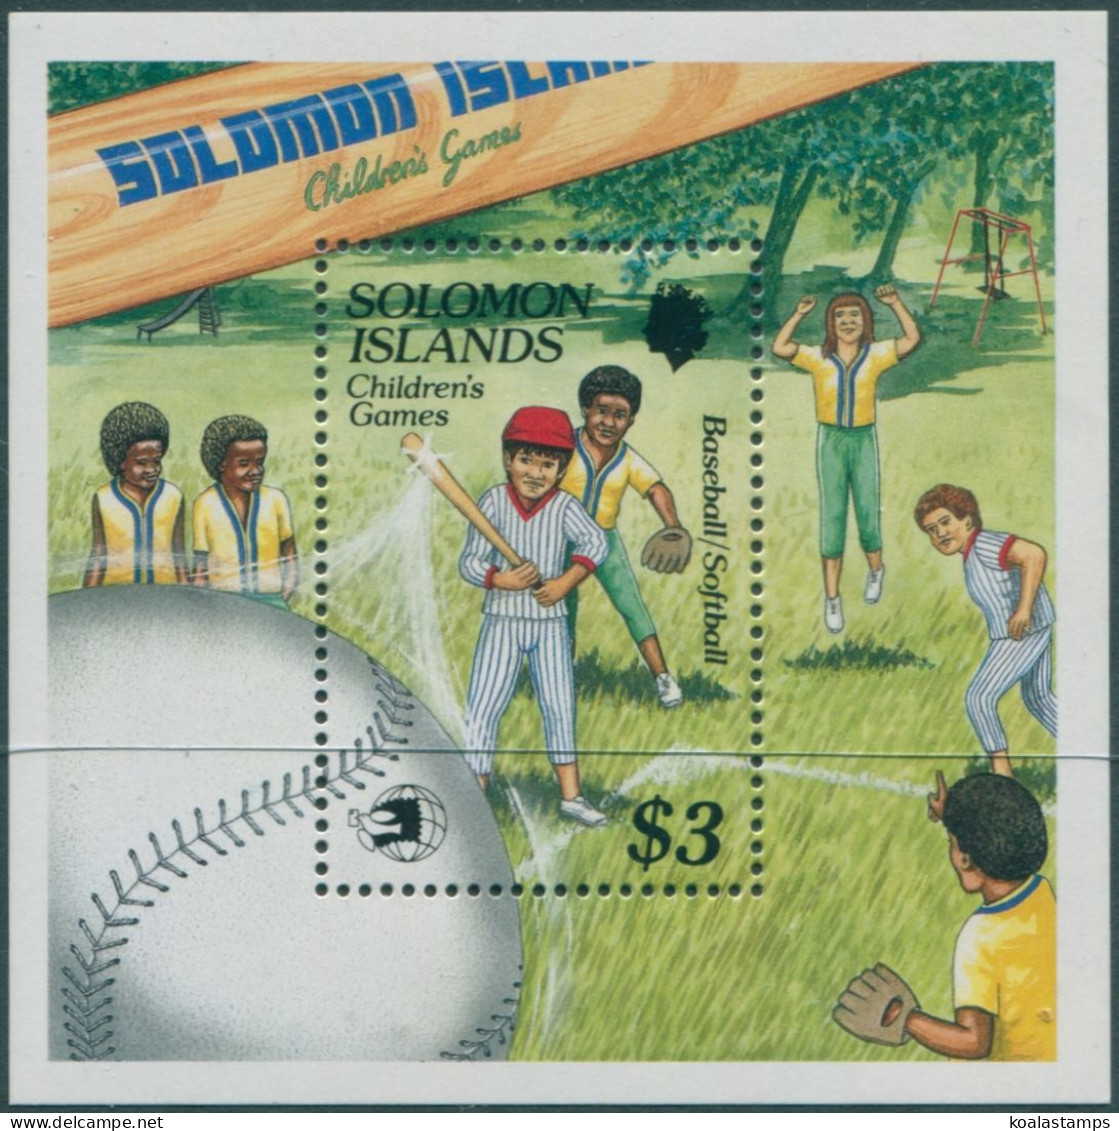 Solomon Islands 1989 SG661 Childrens Games MS MNH - Solomoneilanden (1978-...)